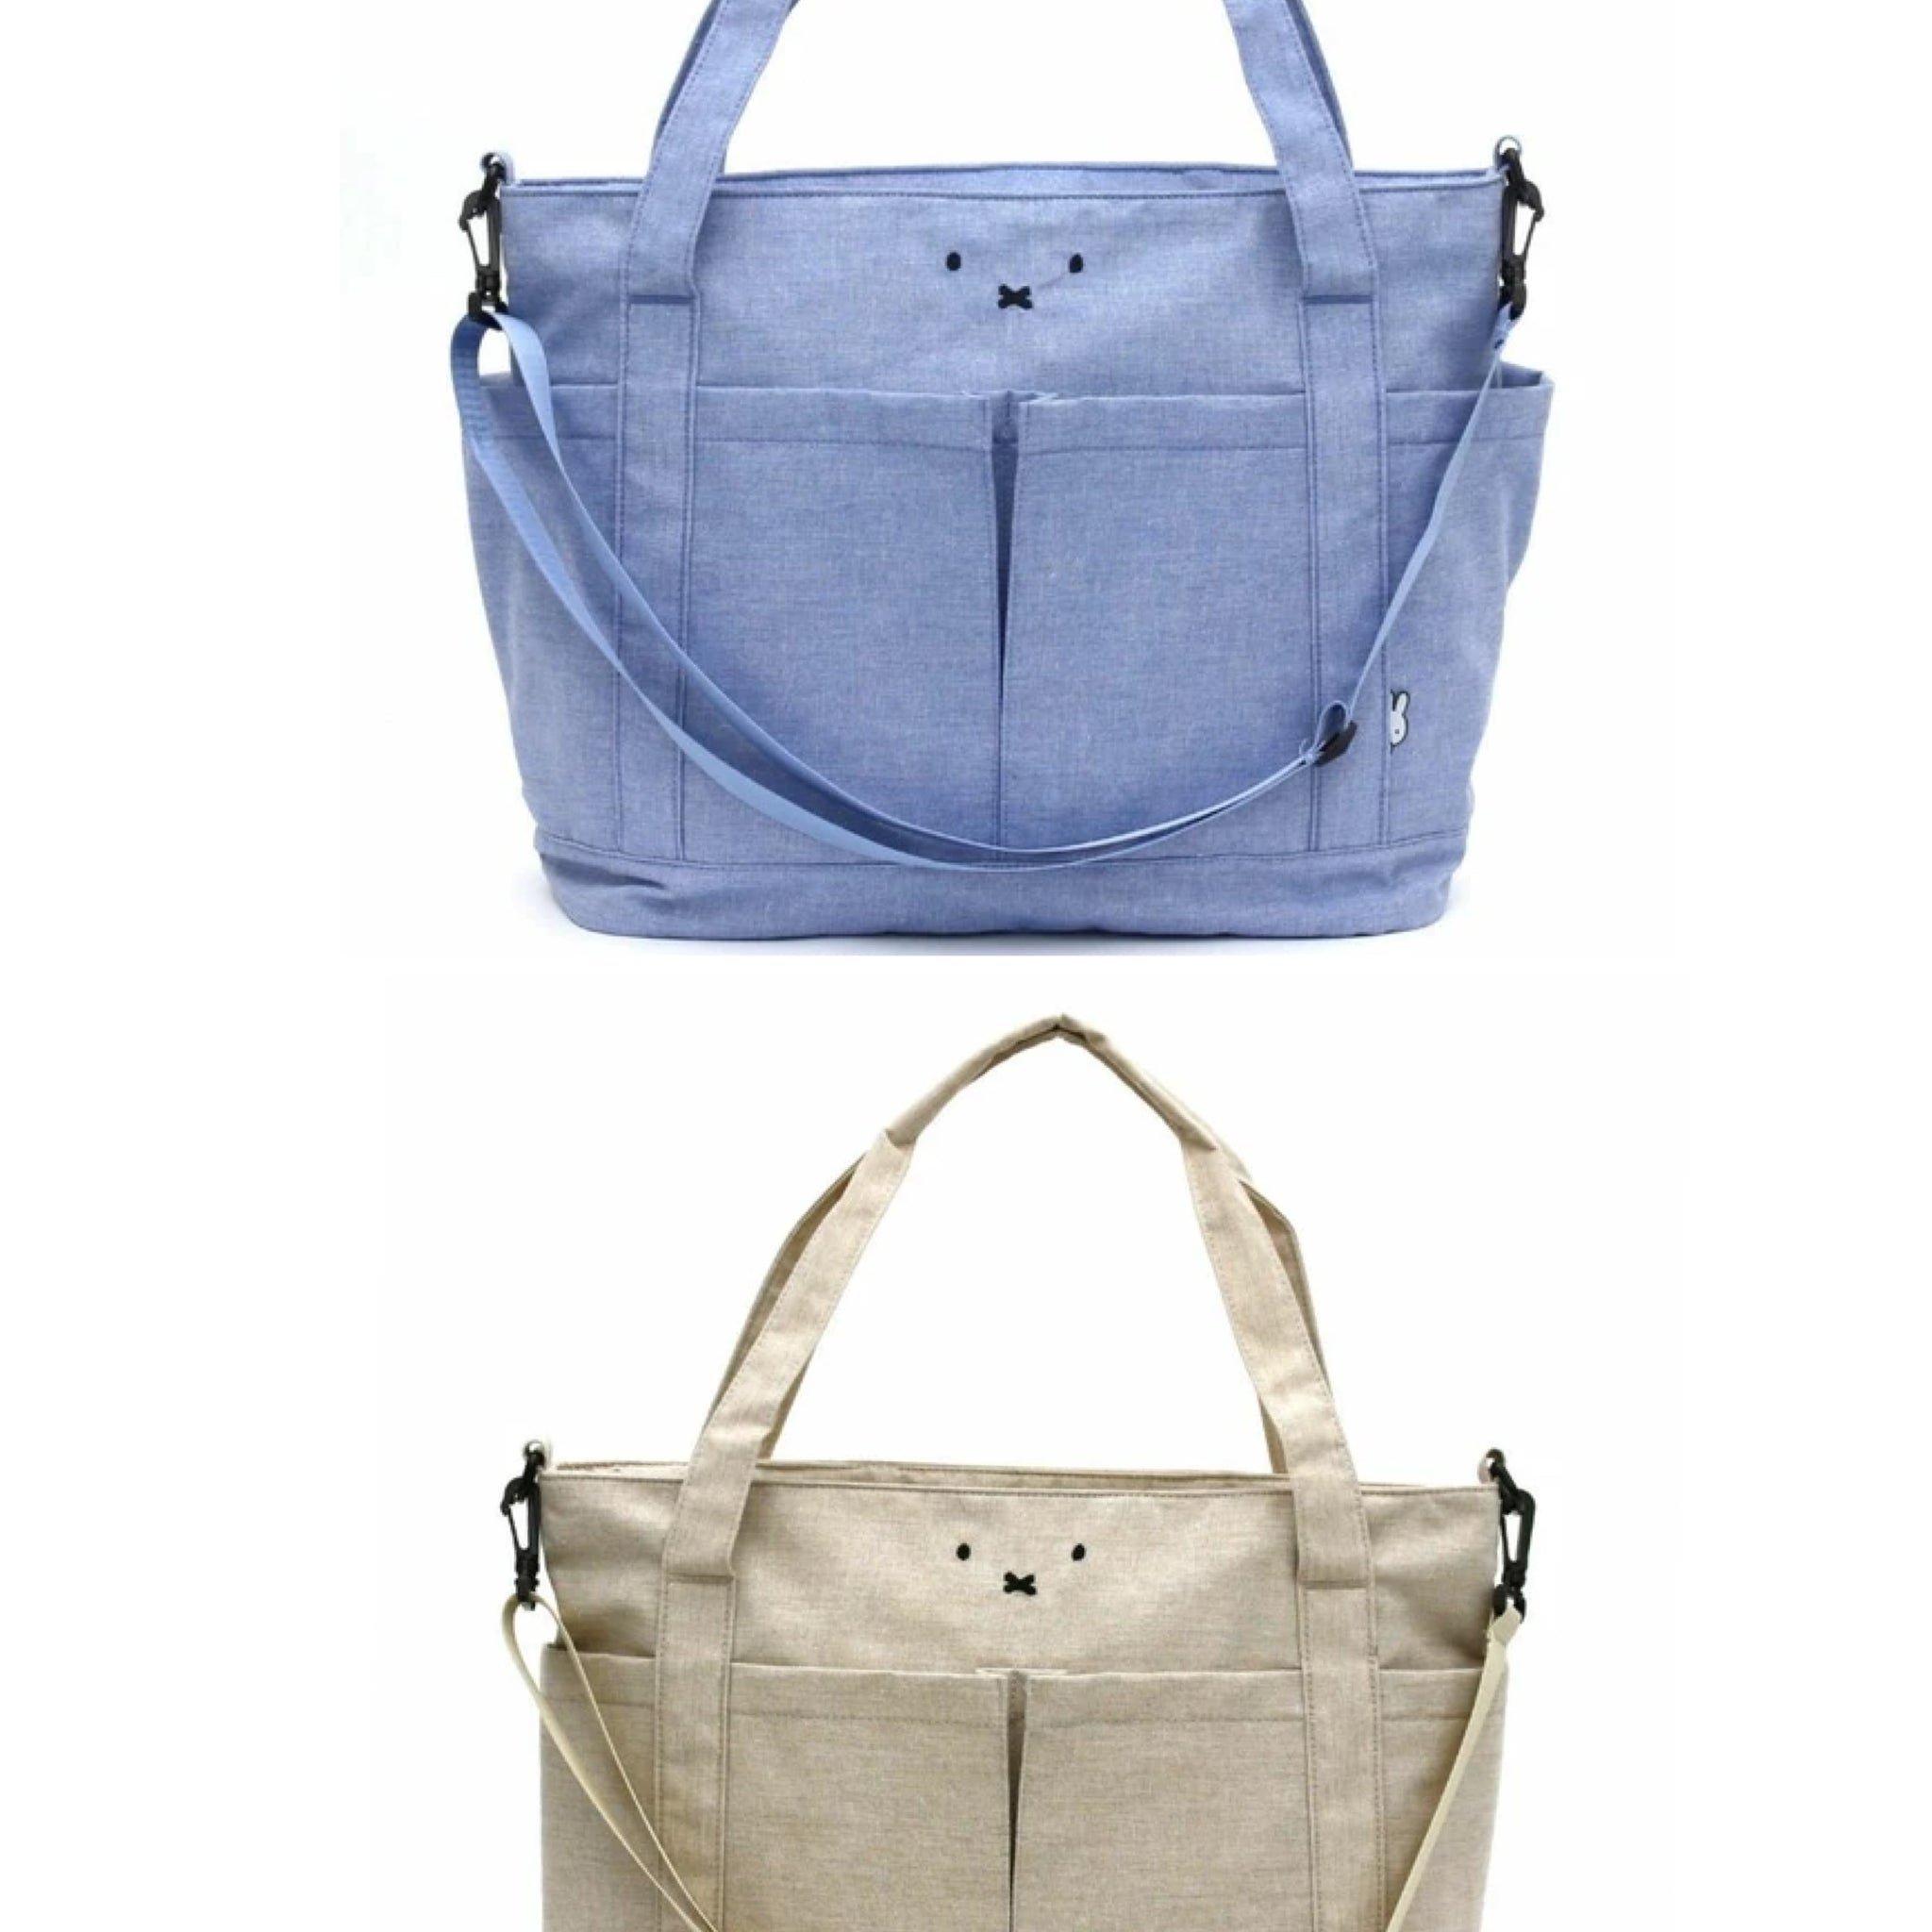 Miffy Shoulder Tote Bag - Light Blue and Beige (C-3)